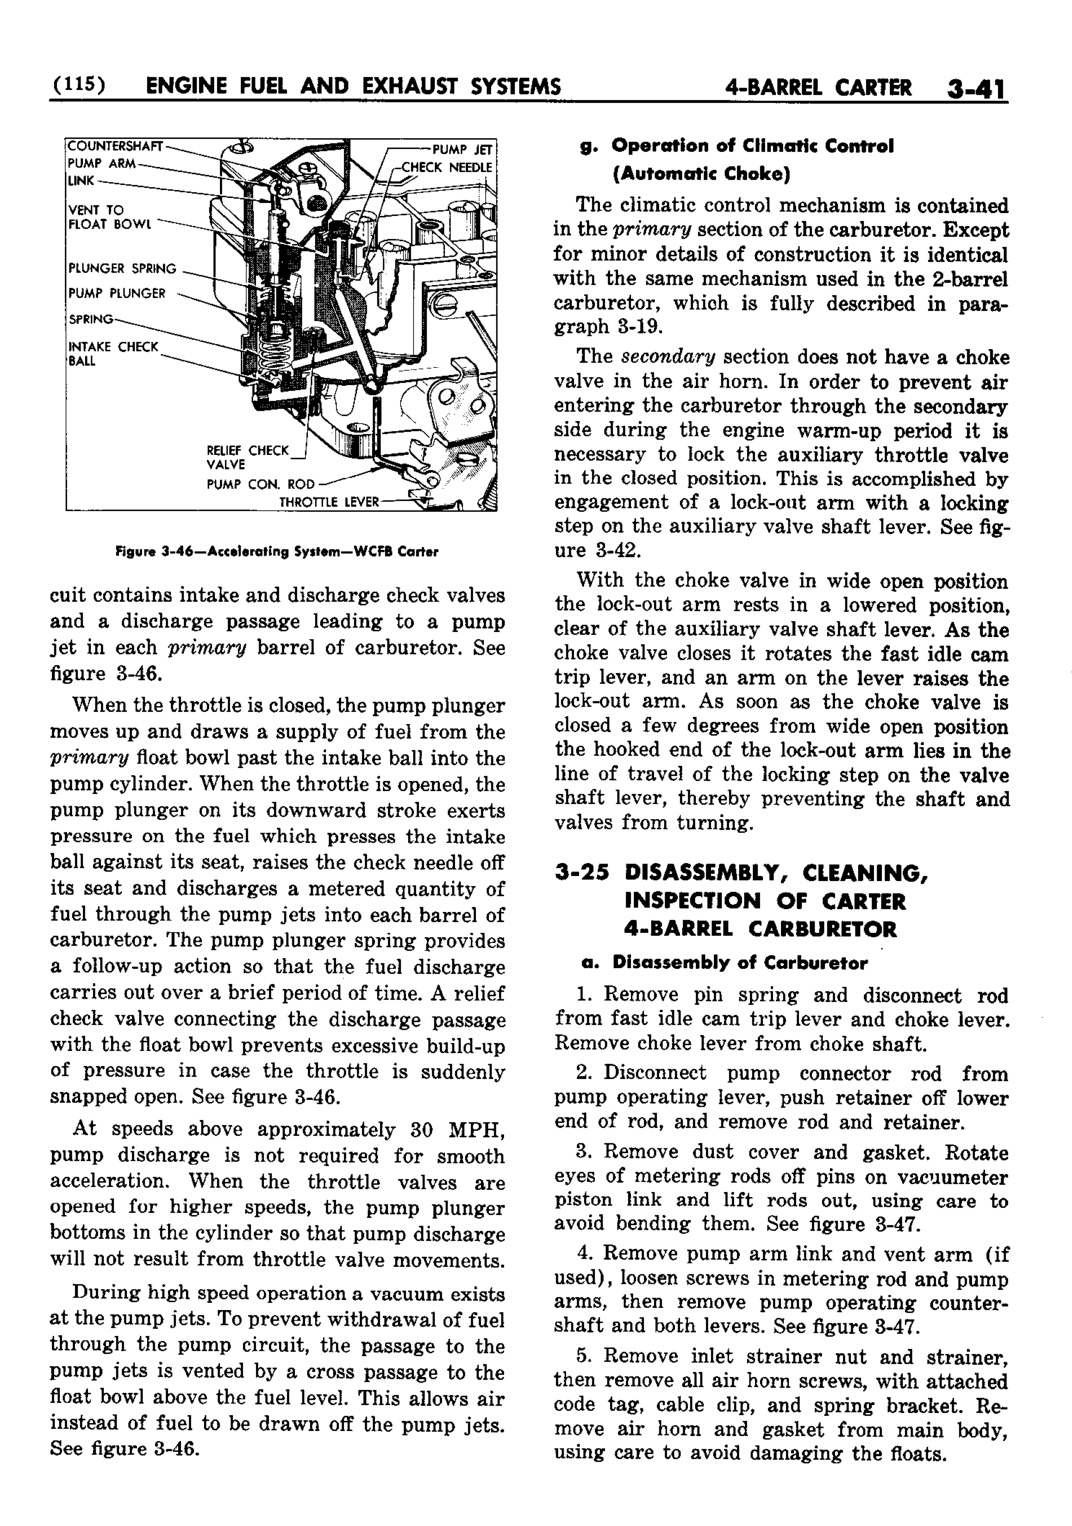 n_04 1952 Buick Shop Manual - Engine Fuel & Exhaust-041-041.jpg